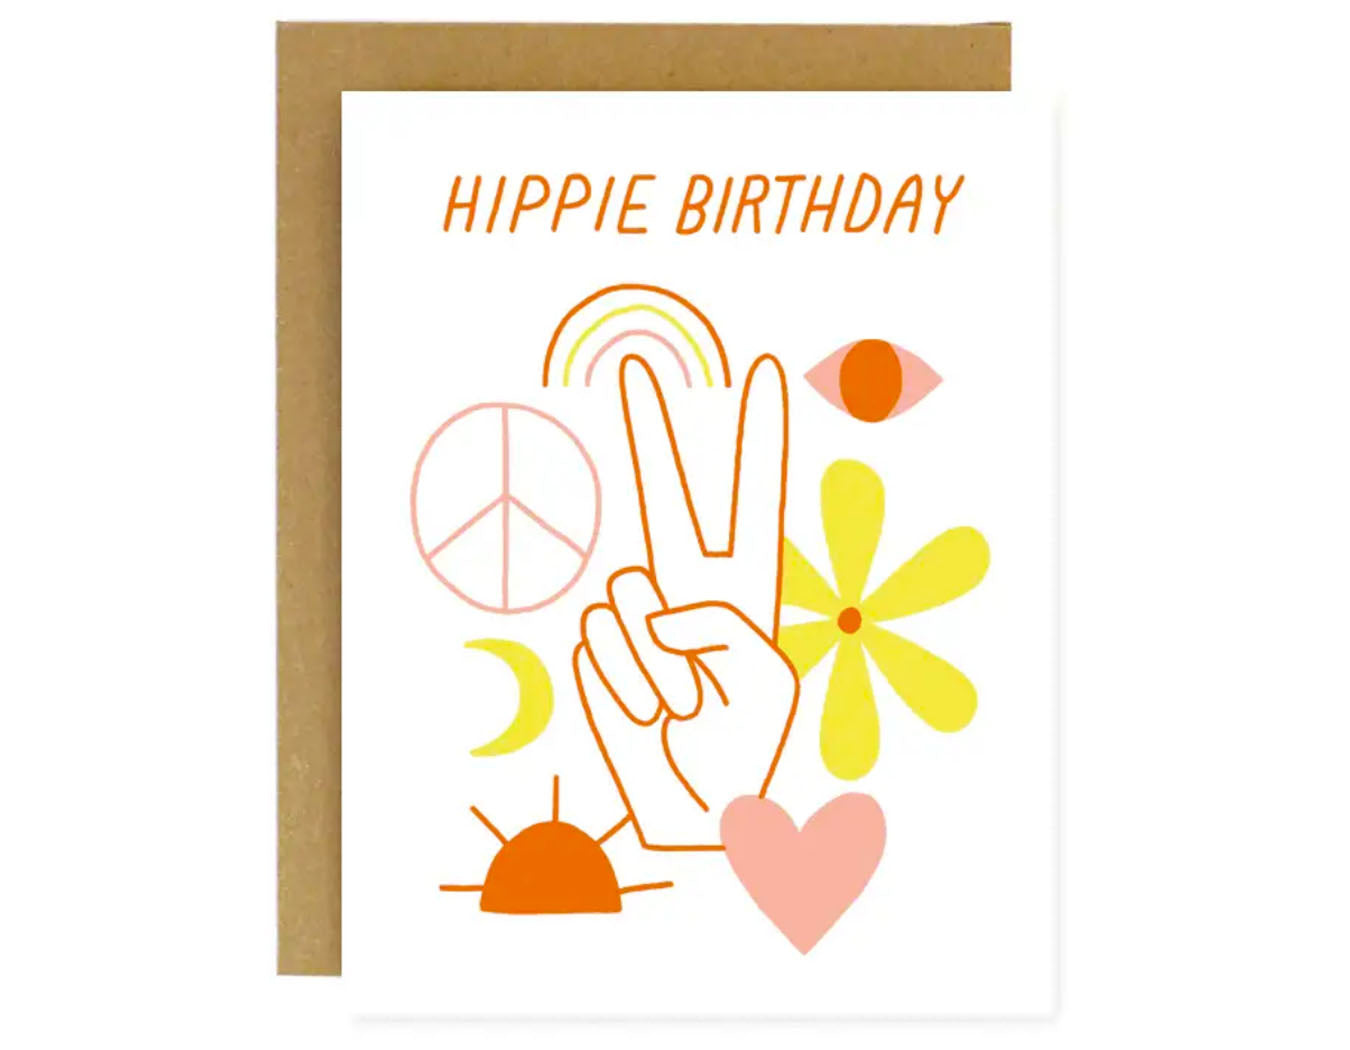 white background orange text hippie birthday peace sign rainbow eye daisy flower, heart, hand peace sign, crescent moon